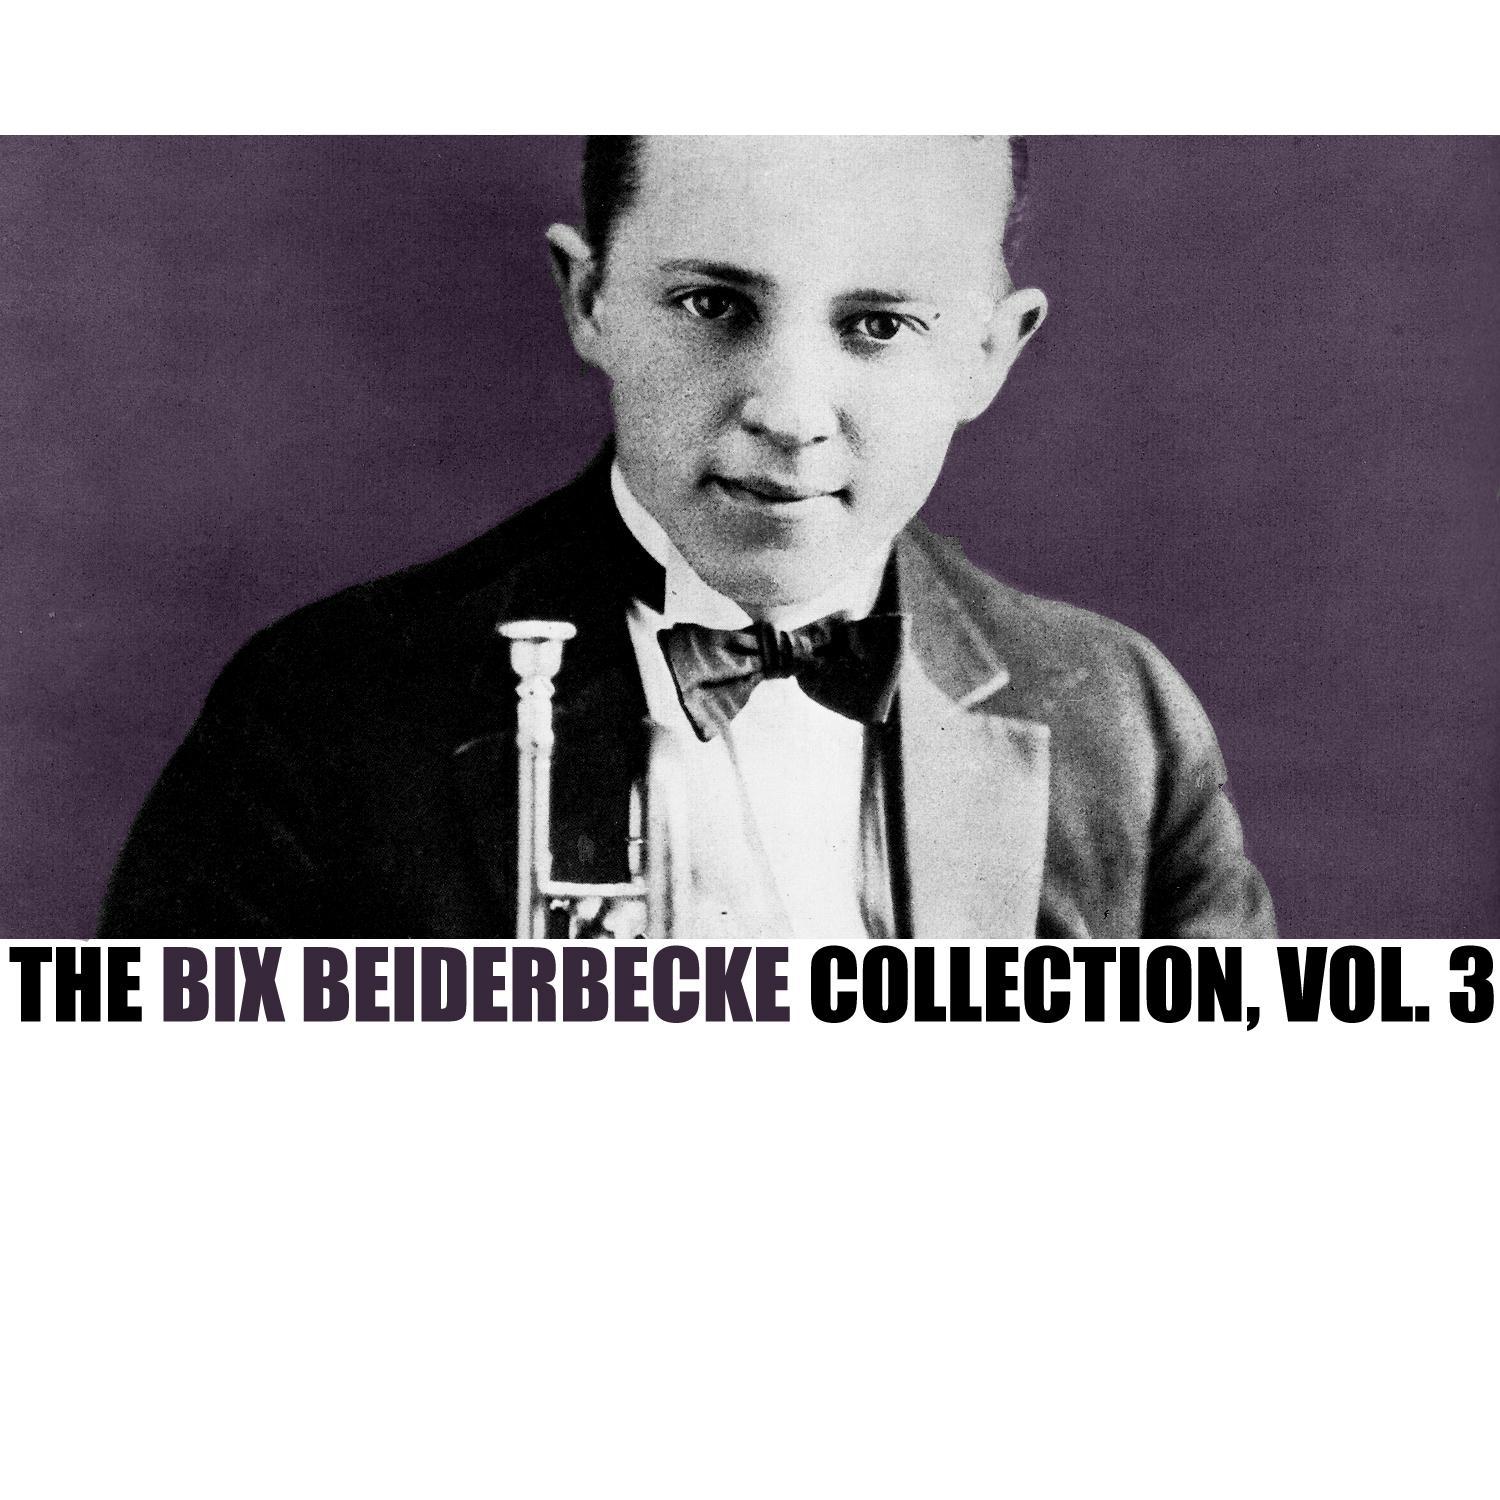 The Bix Beiderbecke Collection, Vol. 3